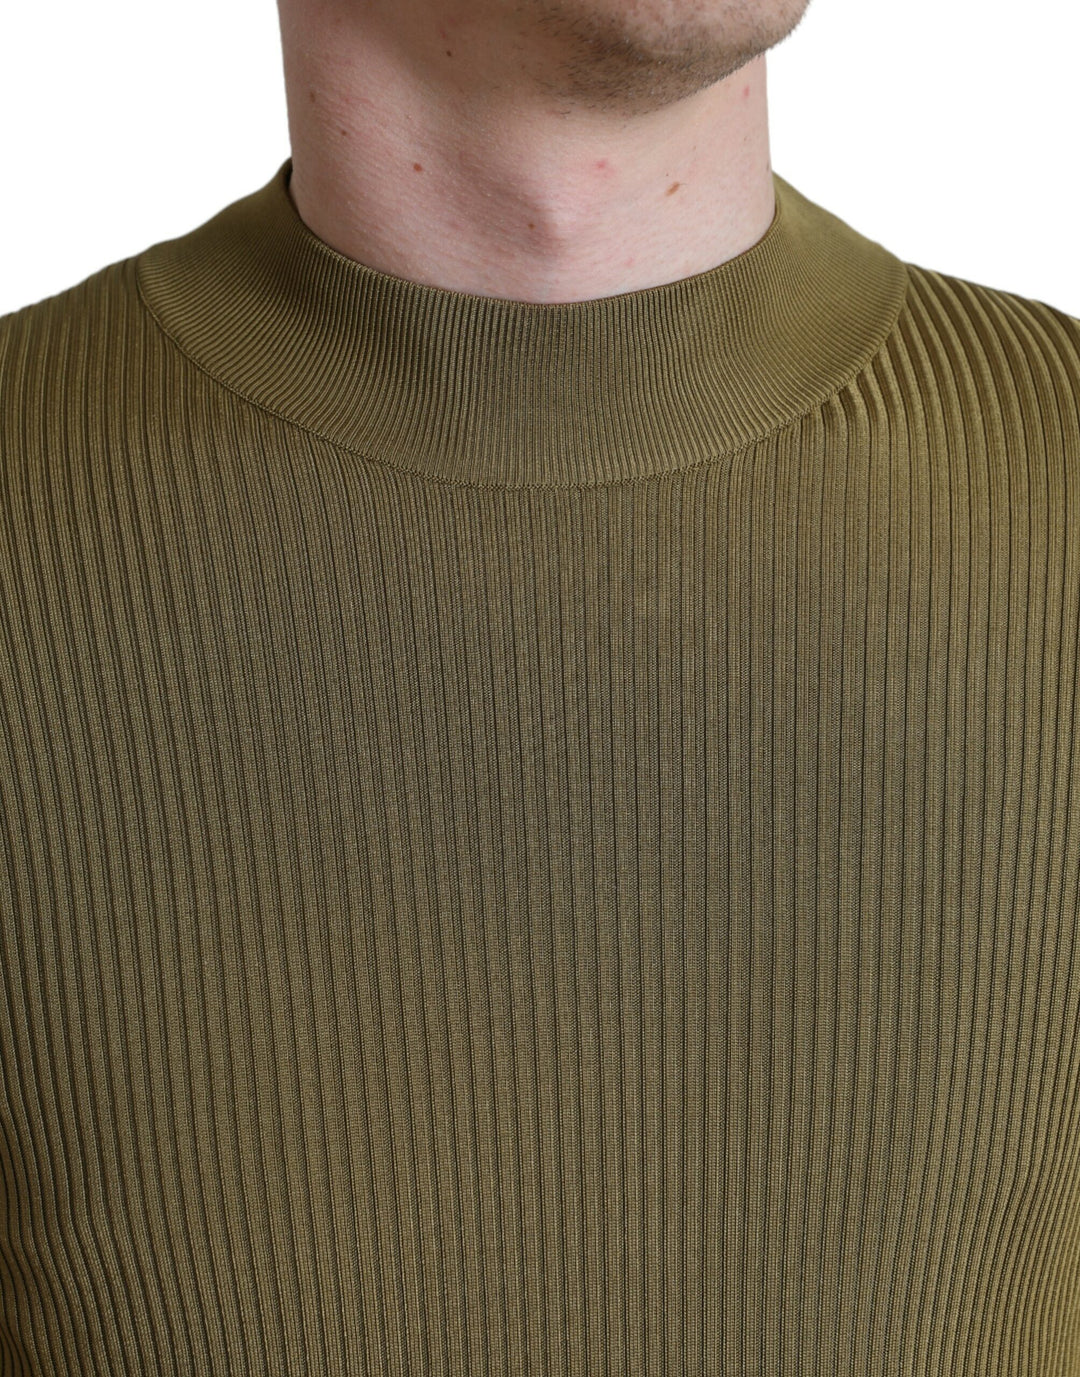 Dolce & Gabbana Army Green Viscose Crew Neck Sweater